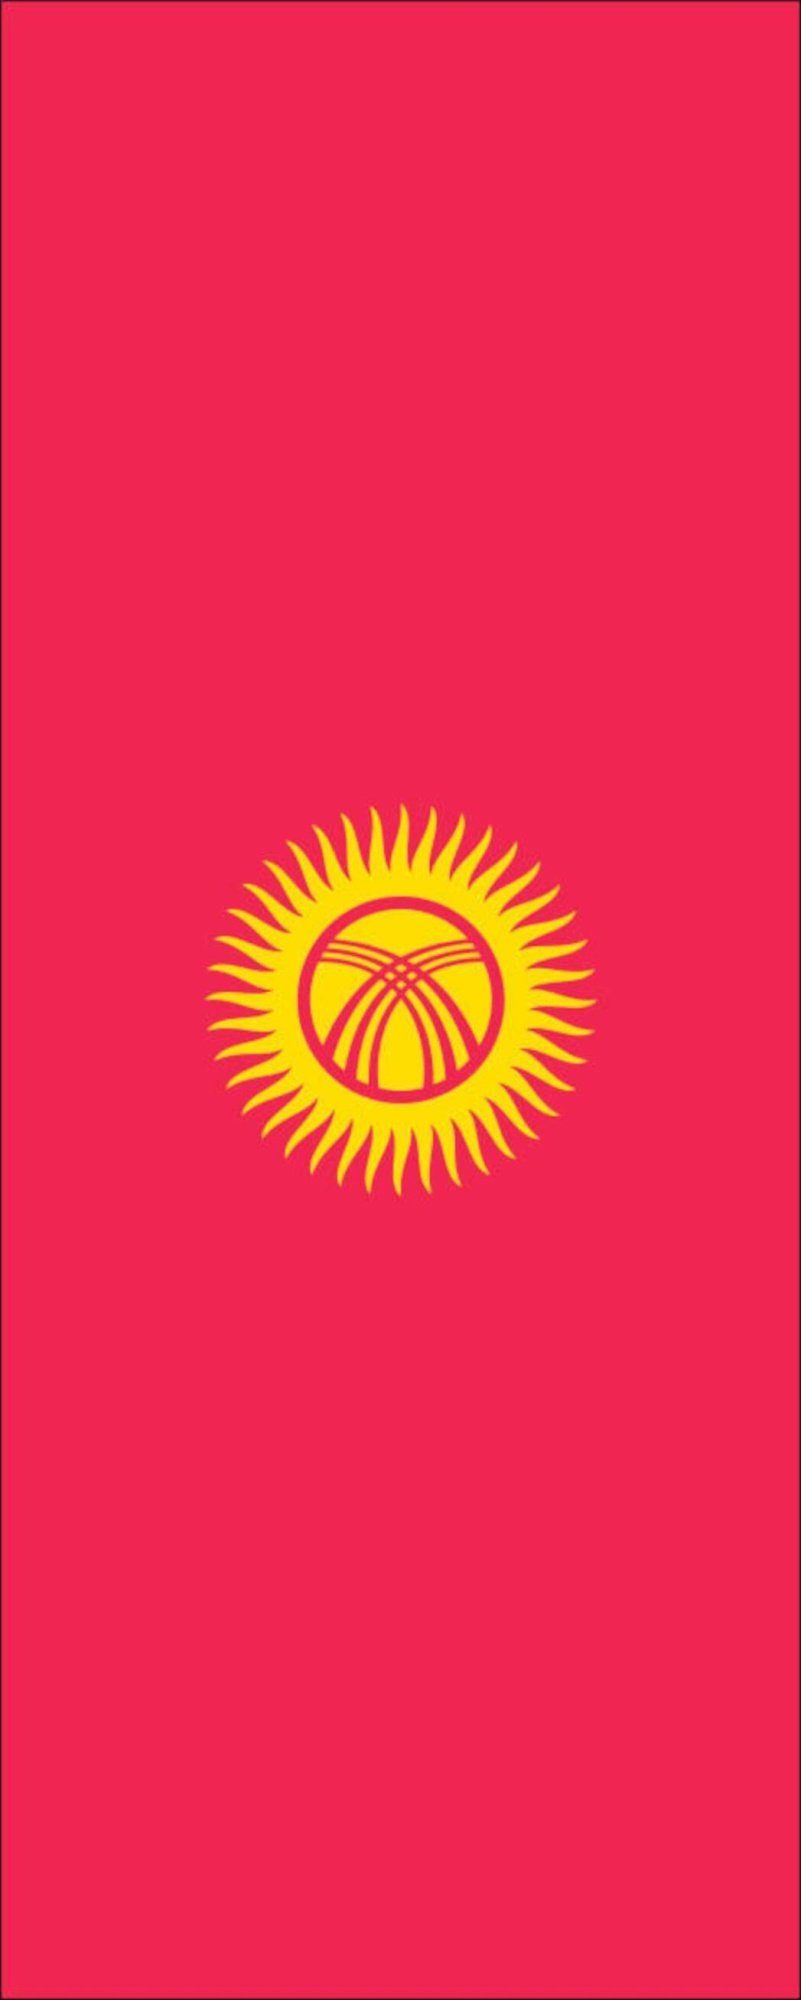 110 Flagge Flagge g/m² Hochformat Kirgisistan flaggenmeer